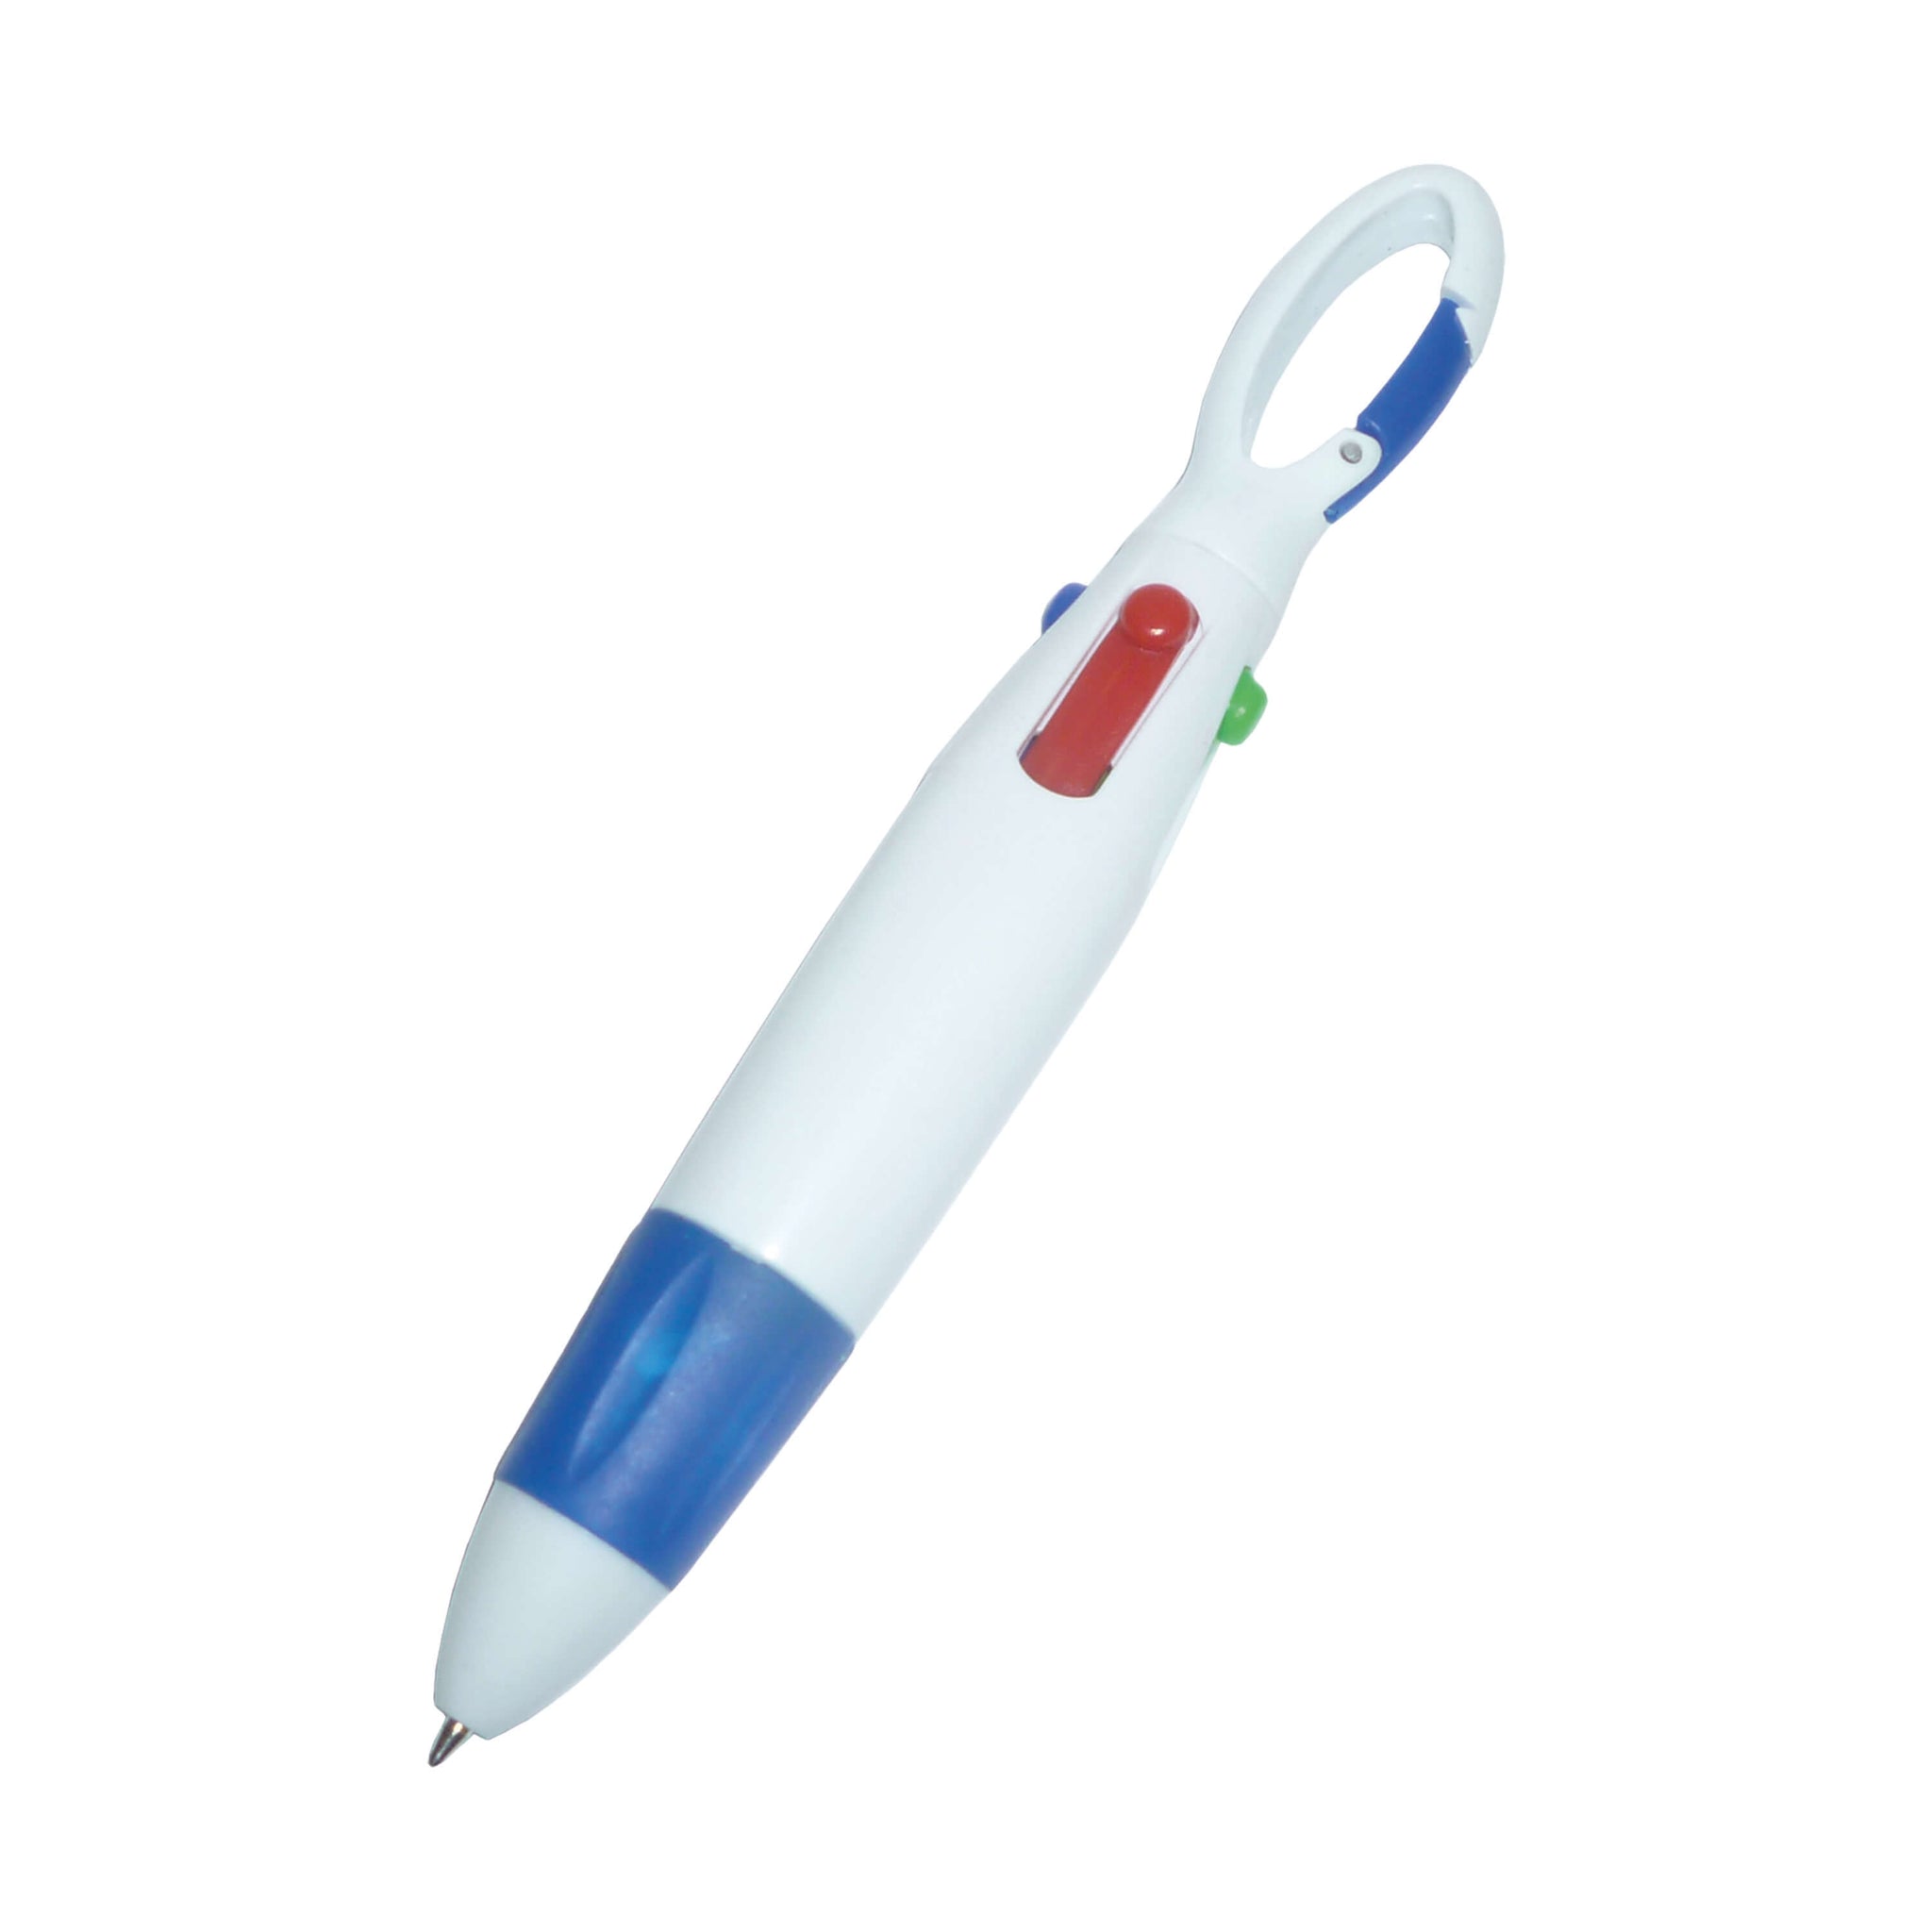 4 Colour Pen with Carabiner Clip- Blue